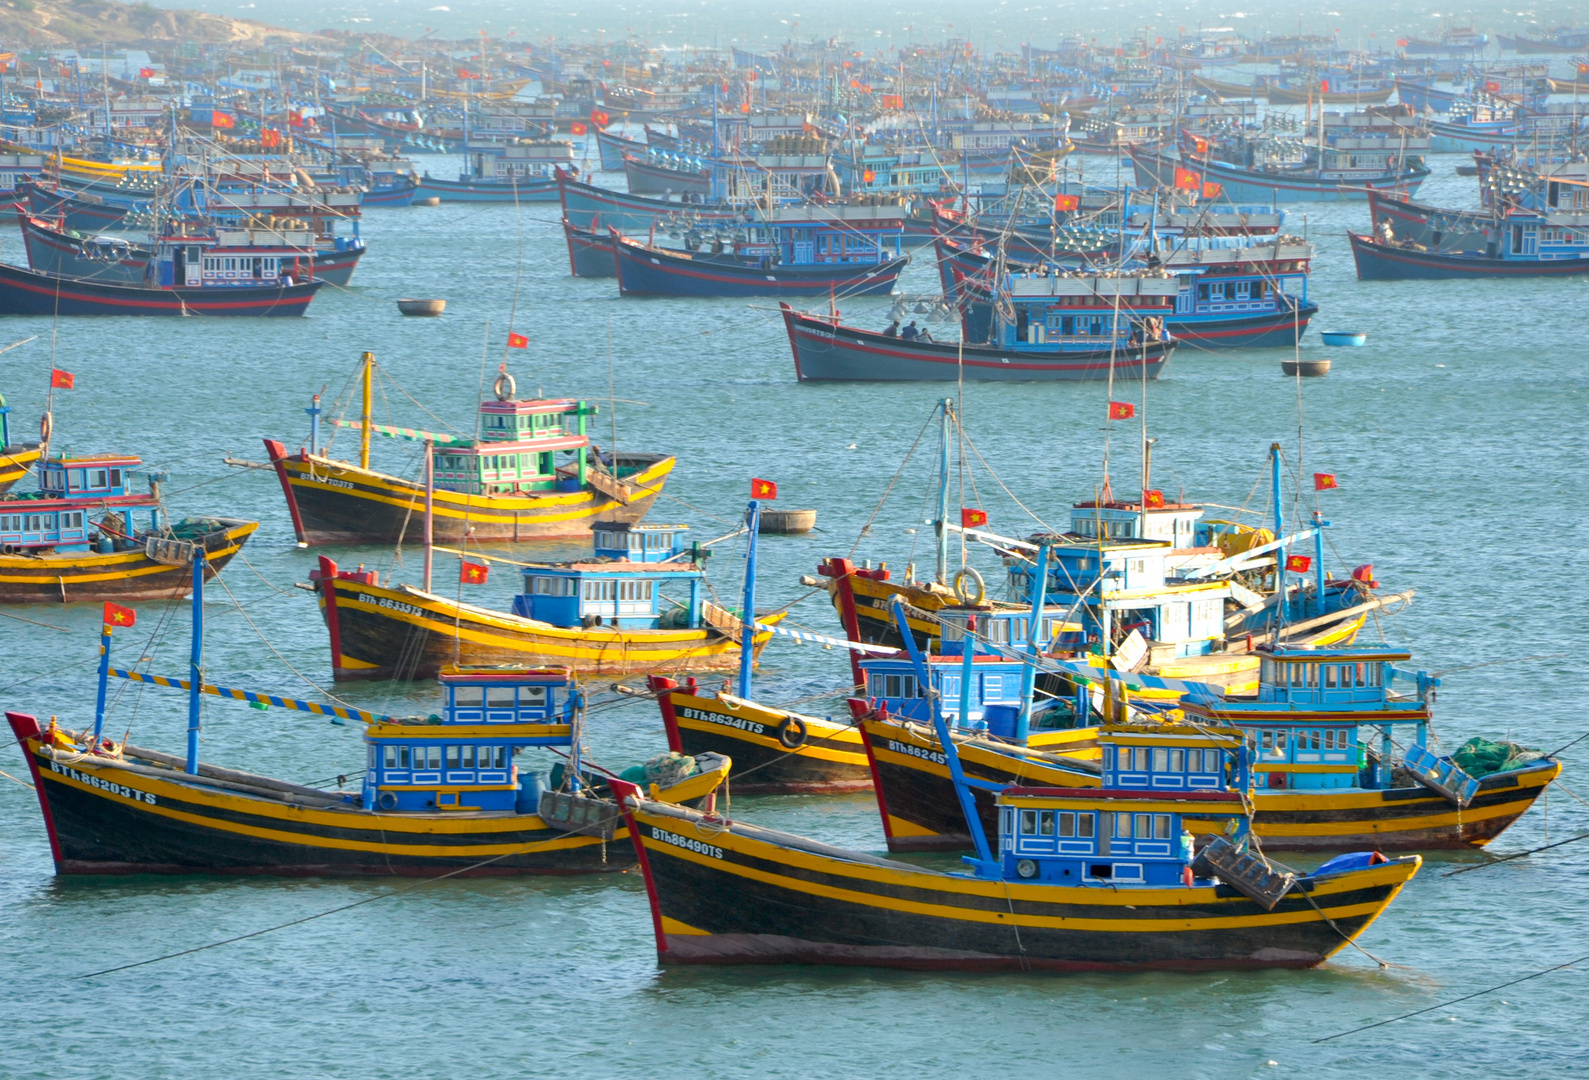 Fisher boats in Vietnam